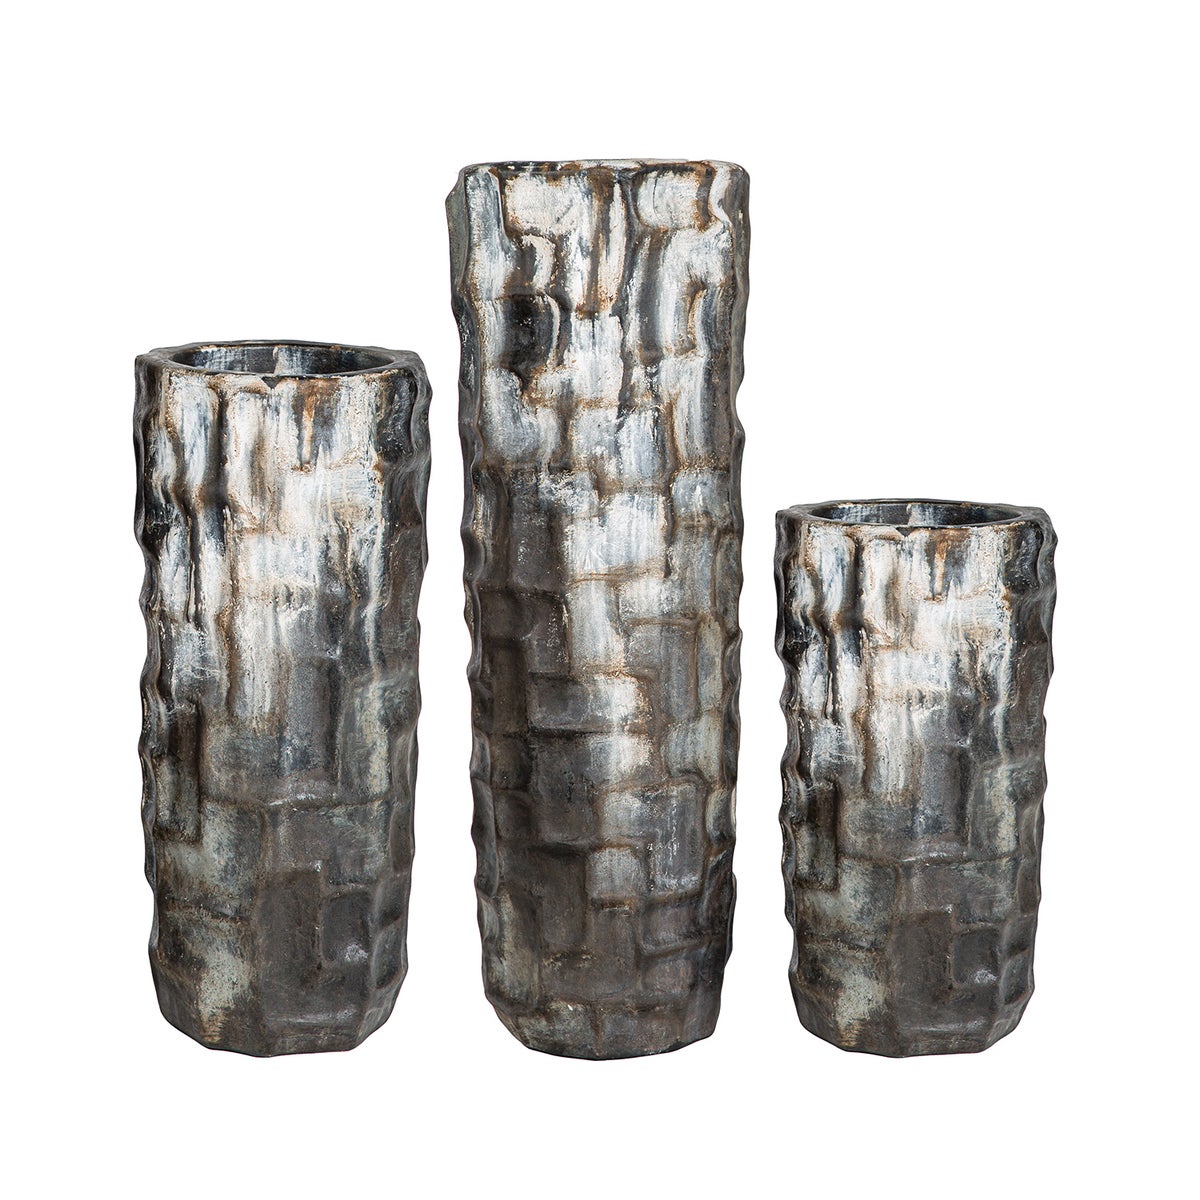 Set of 3 Large Floor Vases in Urban Black Finish